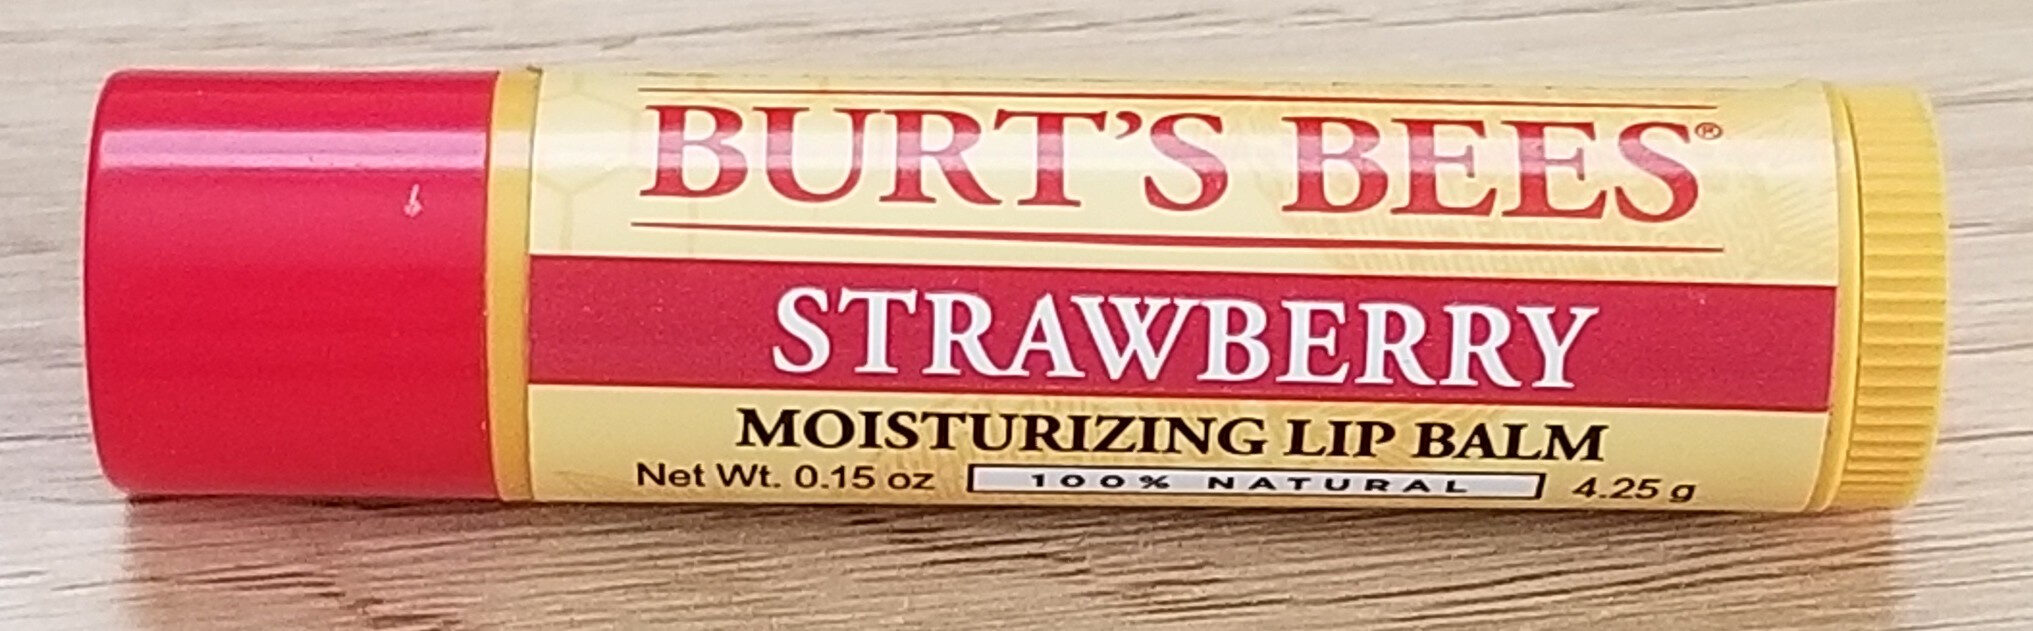 Strawberry Moisturizing Lip Balm - Produto - en